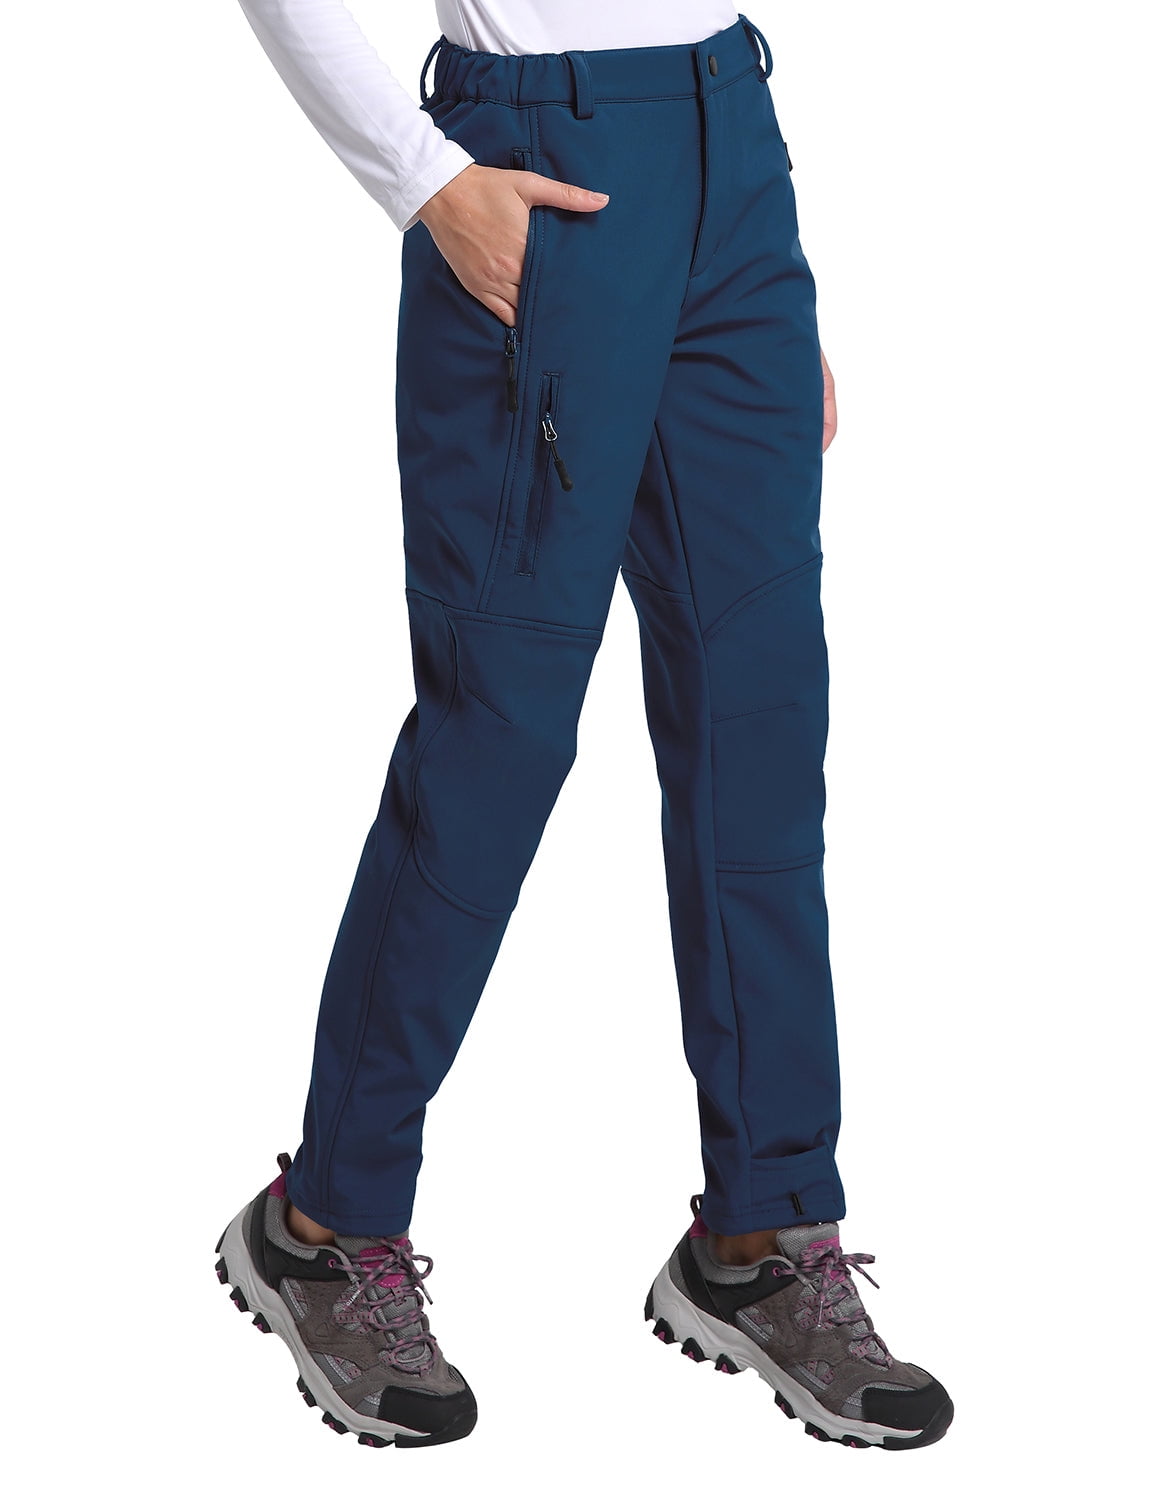 Baleaf Women's Ski Pants Snow Pants Hiking Fleece-Lined Windproof  Water-Resistant Outdoor Insulated Soft Shell Deep Blue XXL 